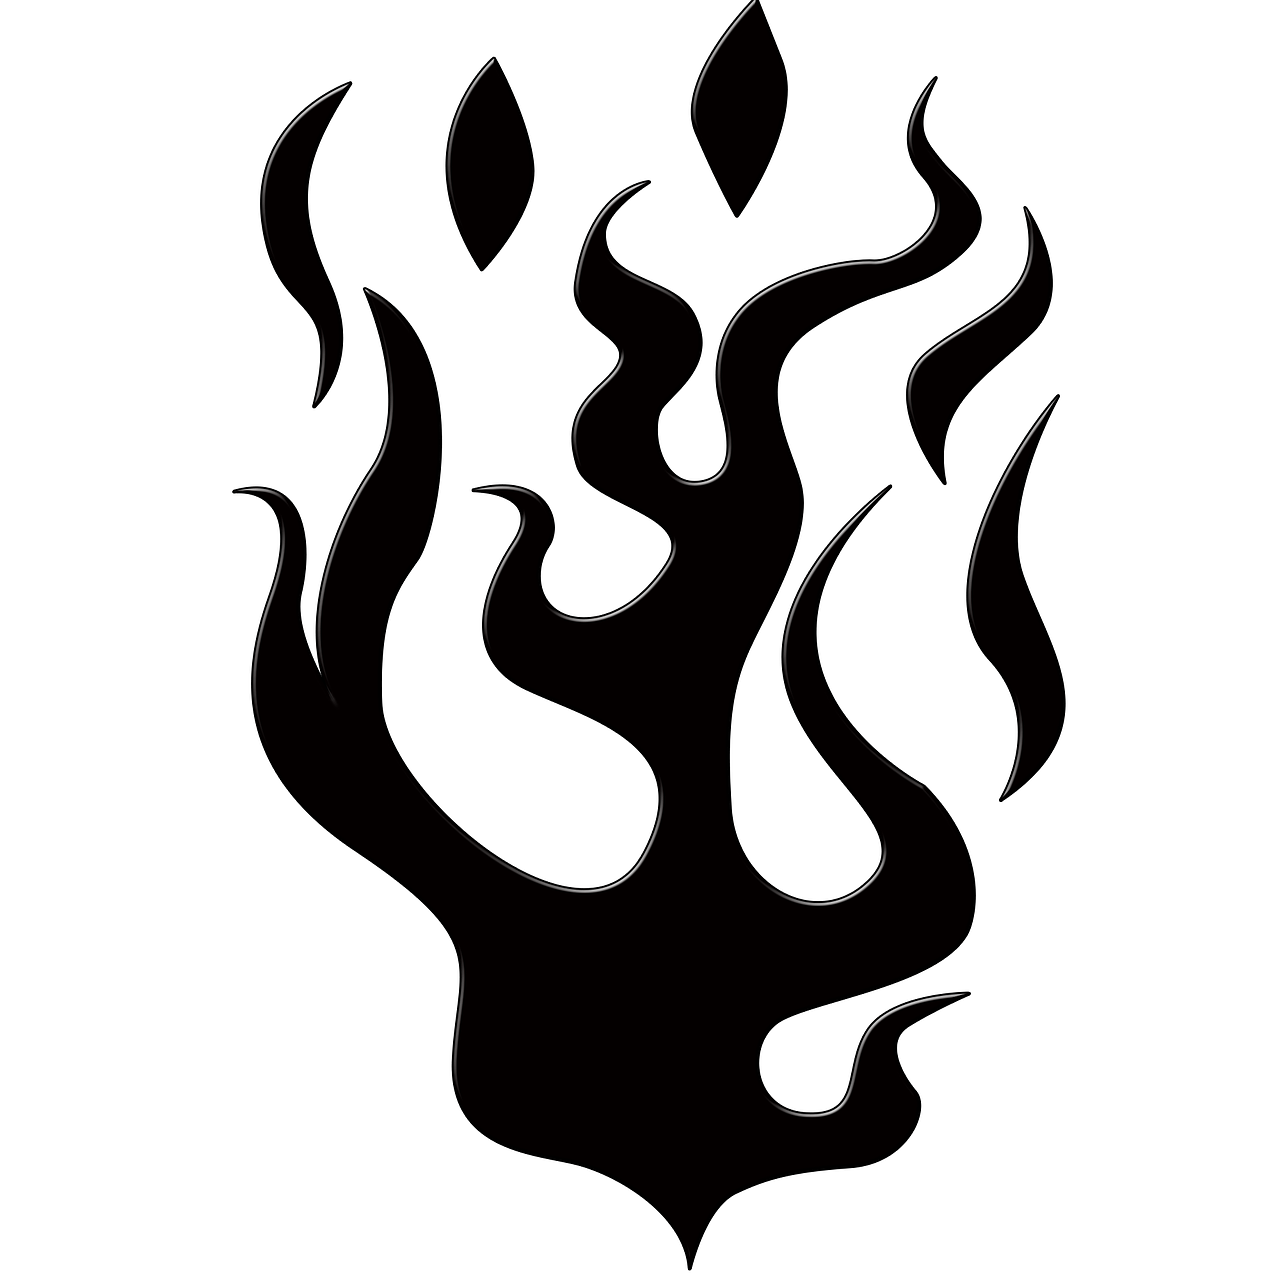 flames silhouette shape free photo